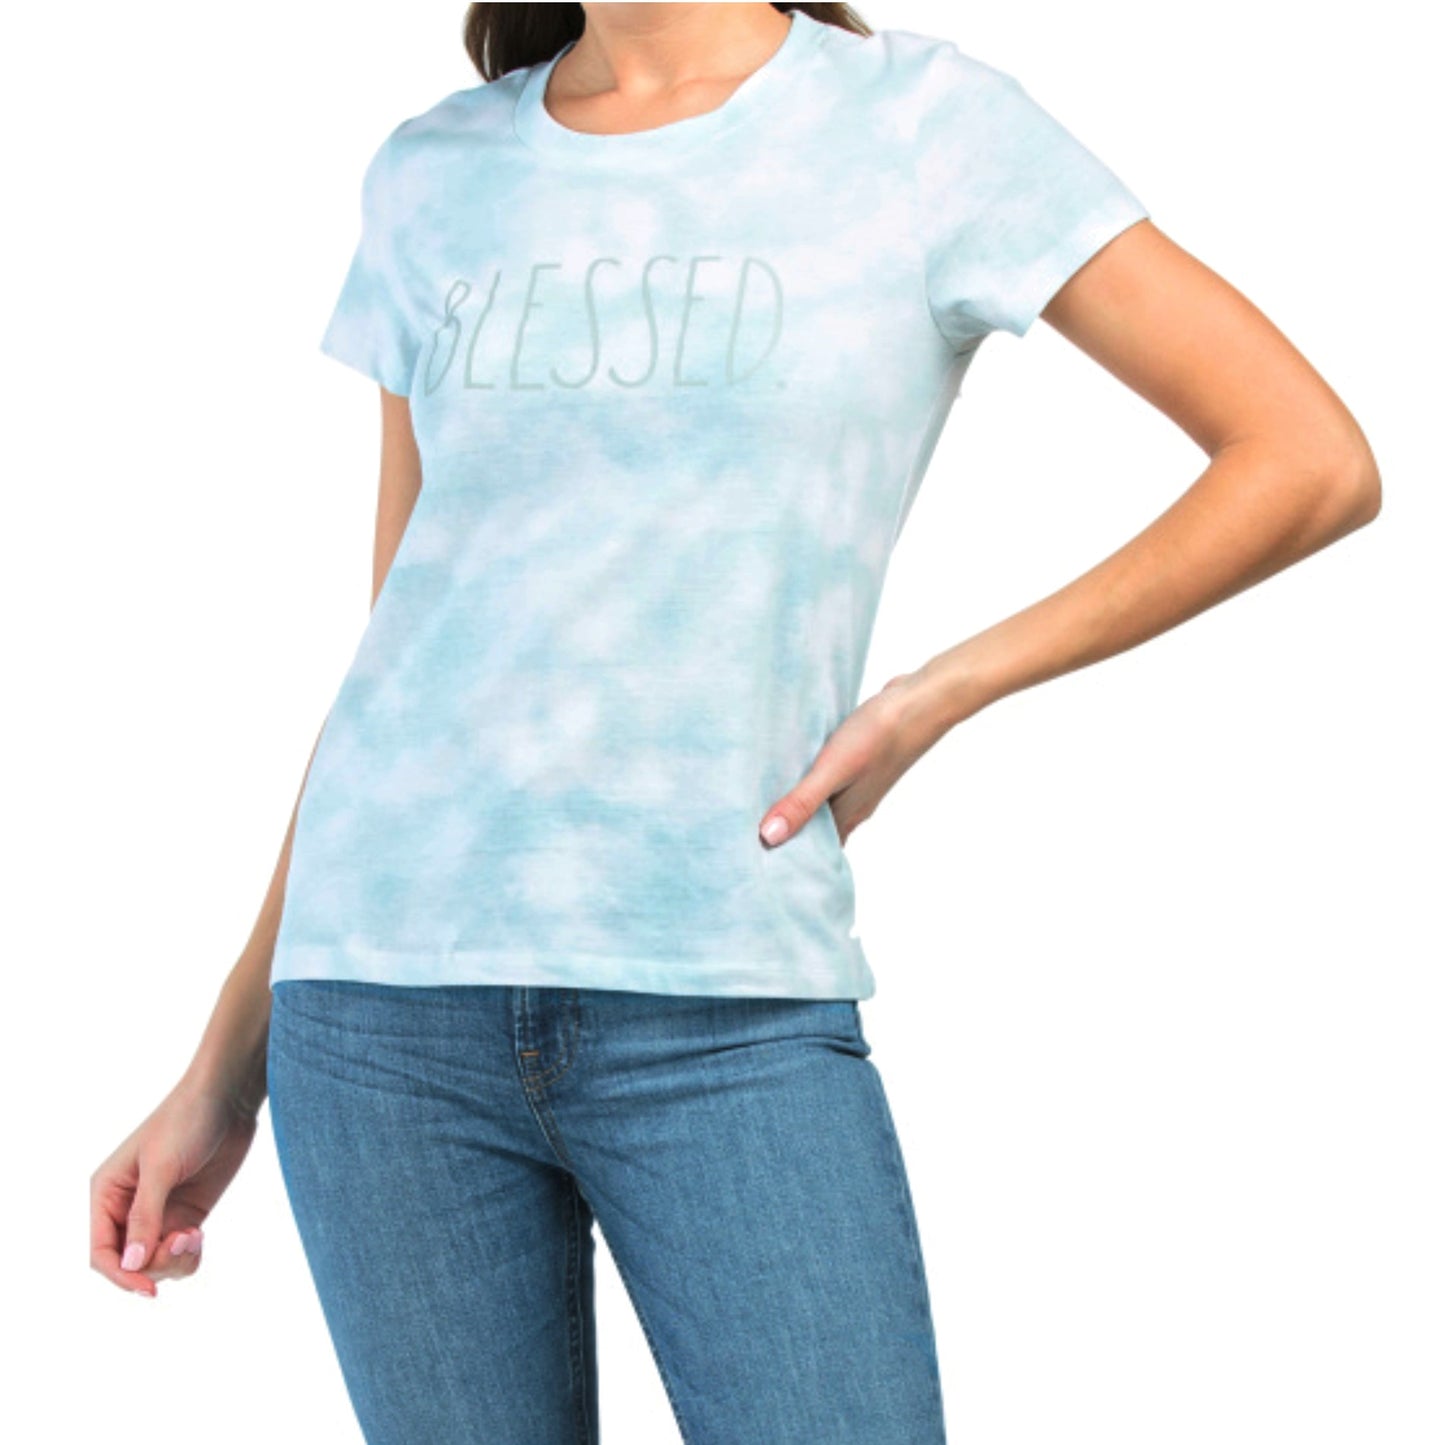 Rae Dunn Women's Blessed Graphic Print Tie Dye Cotton T-shirt